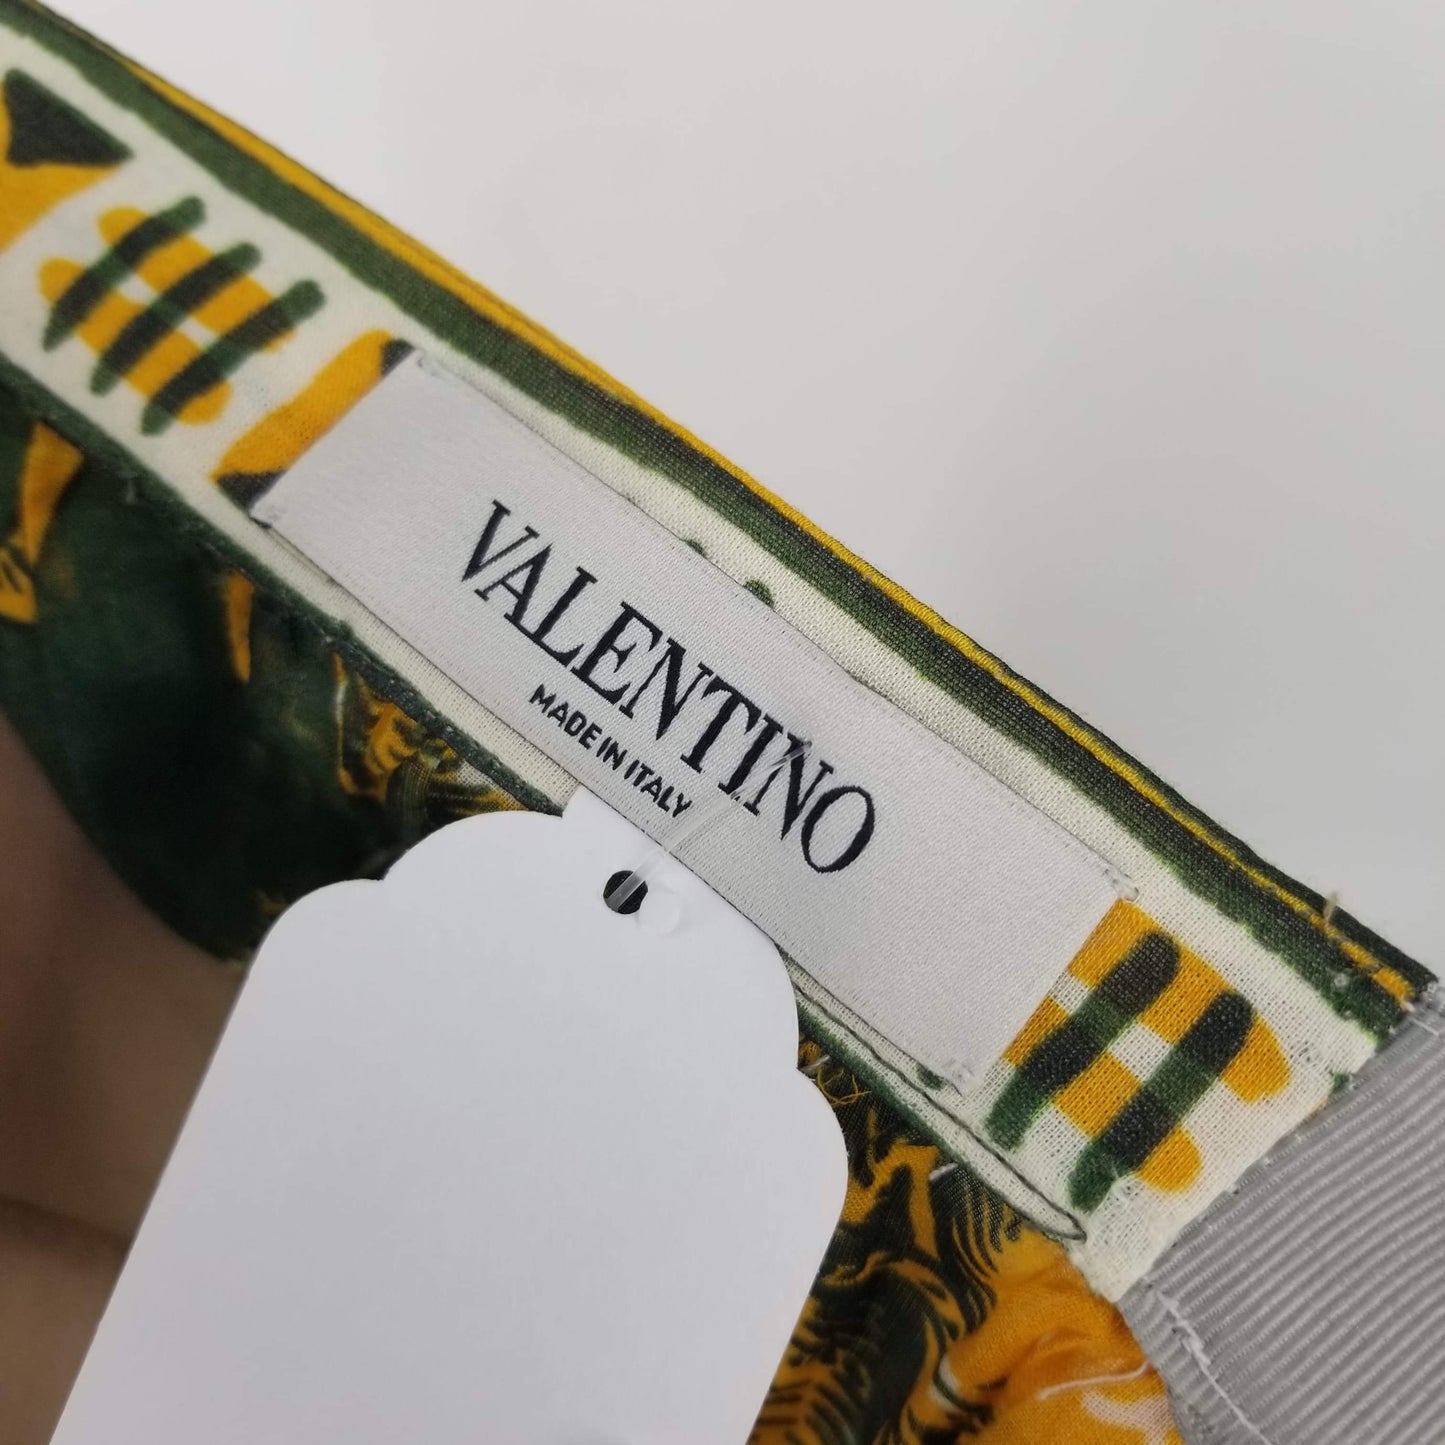 Authentic Valentino Green/Gold Elephant Print Cotton Skirt Sz 8